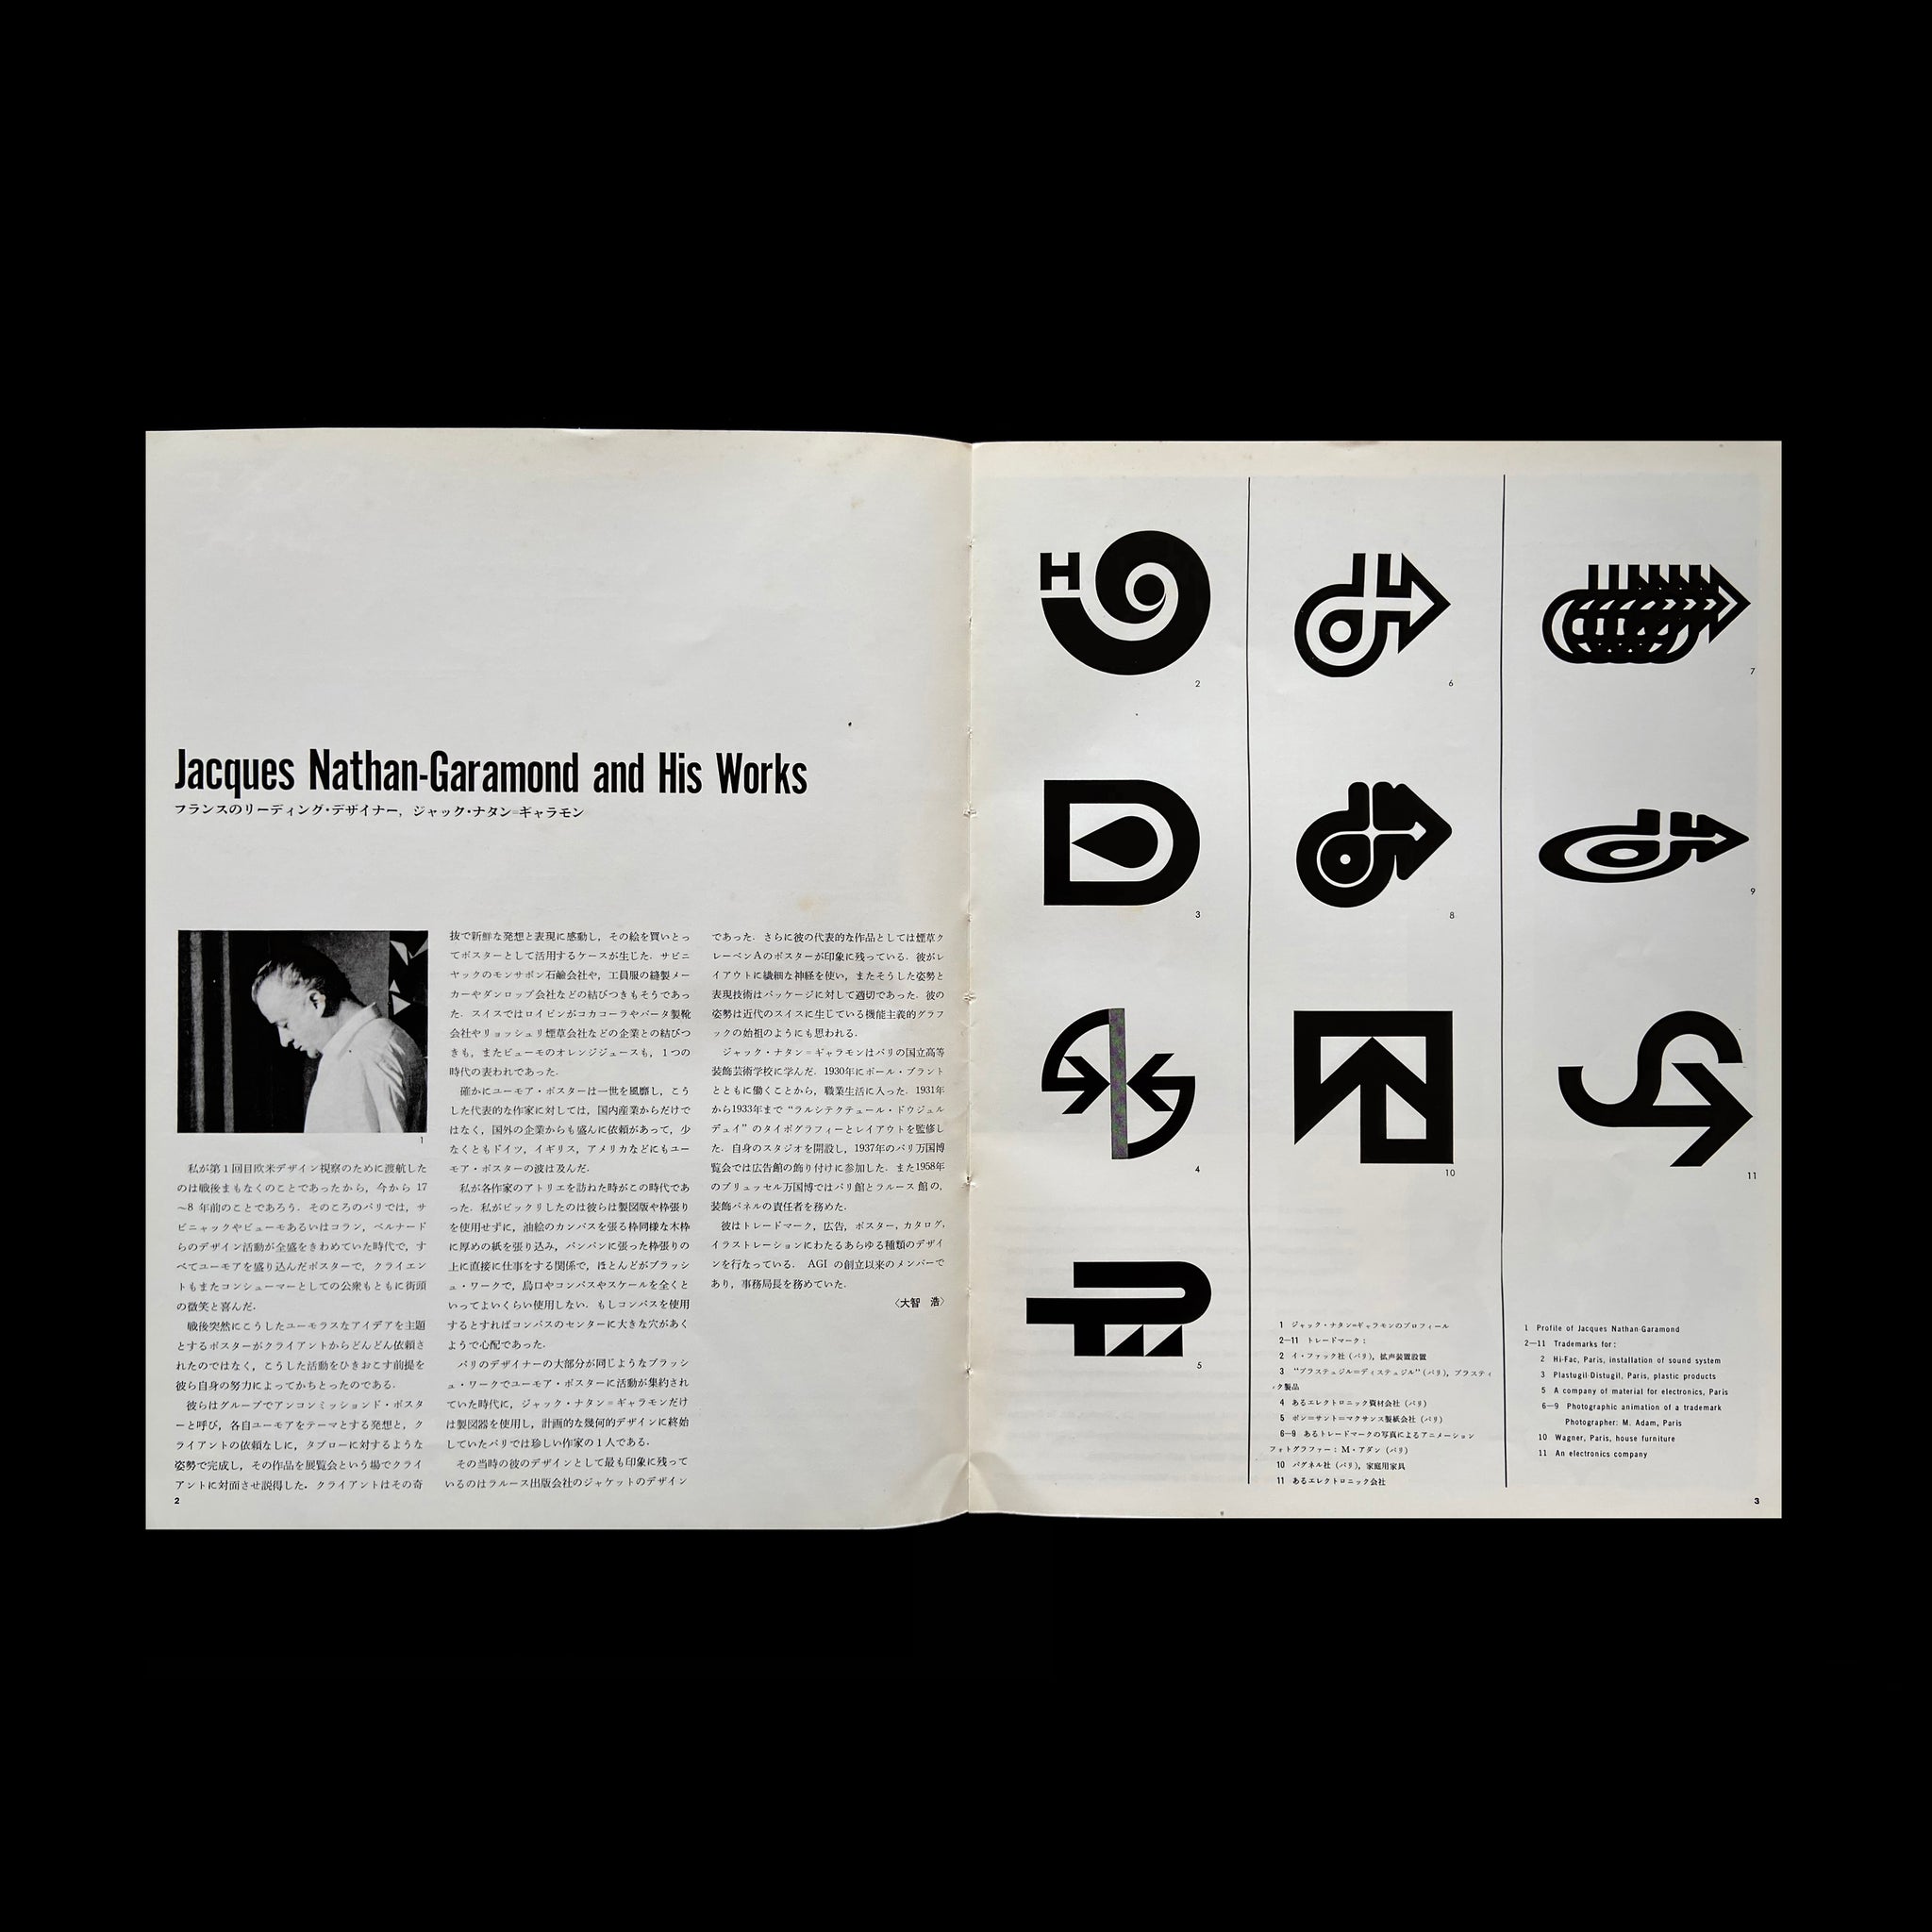 IDEA 96, Jacques Nathan-Garamond, 1969